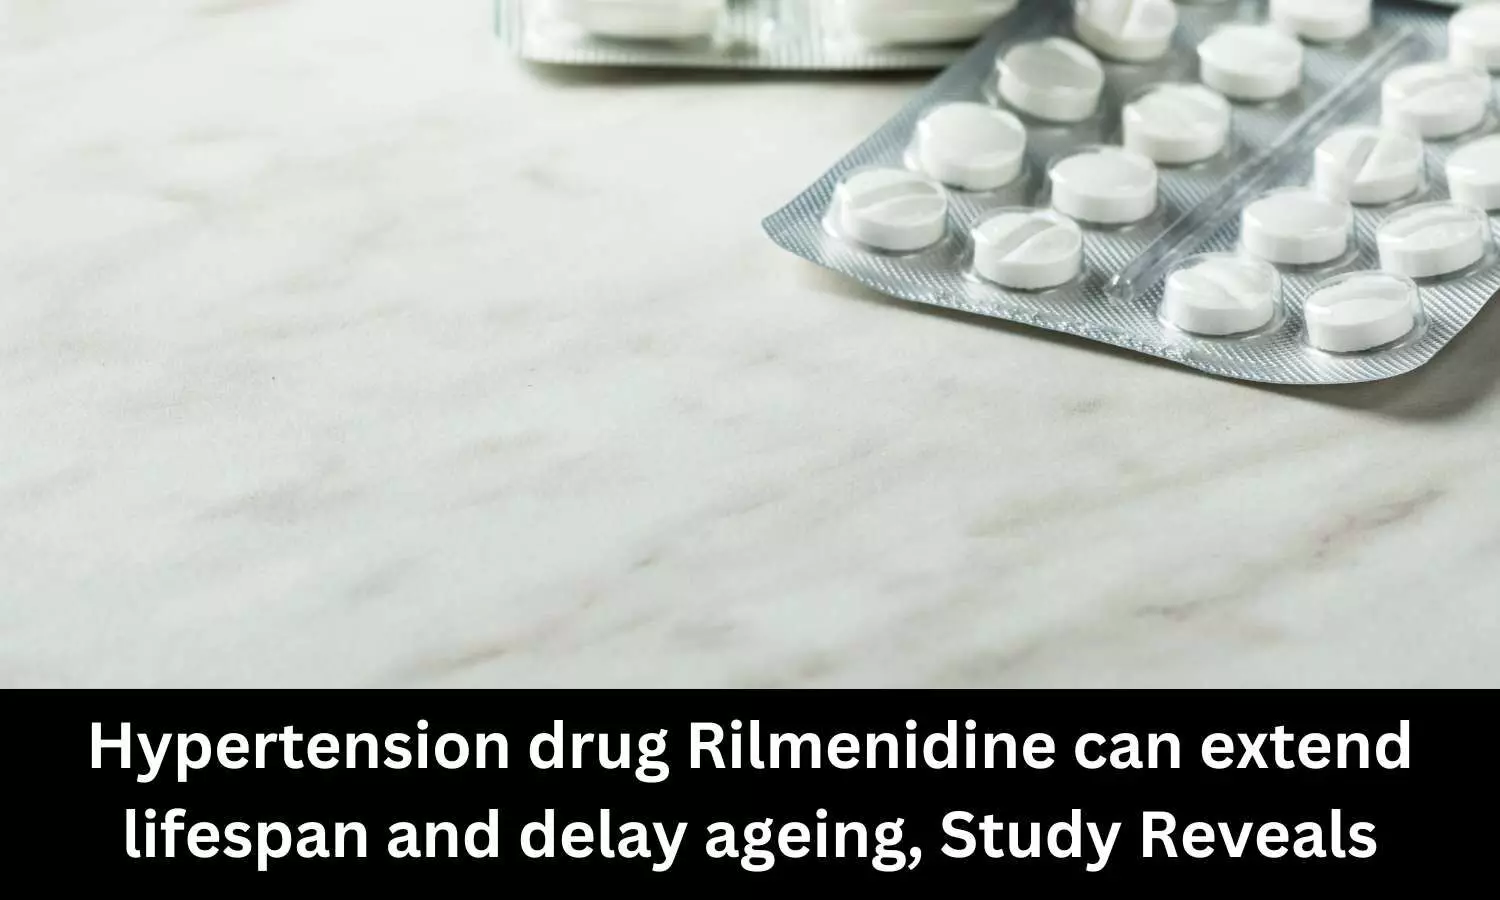 Hypertension drug Rilmenidine can extend lifespan and delay ageing, Study Reveals